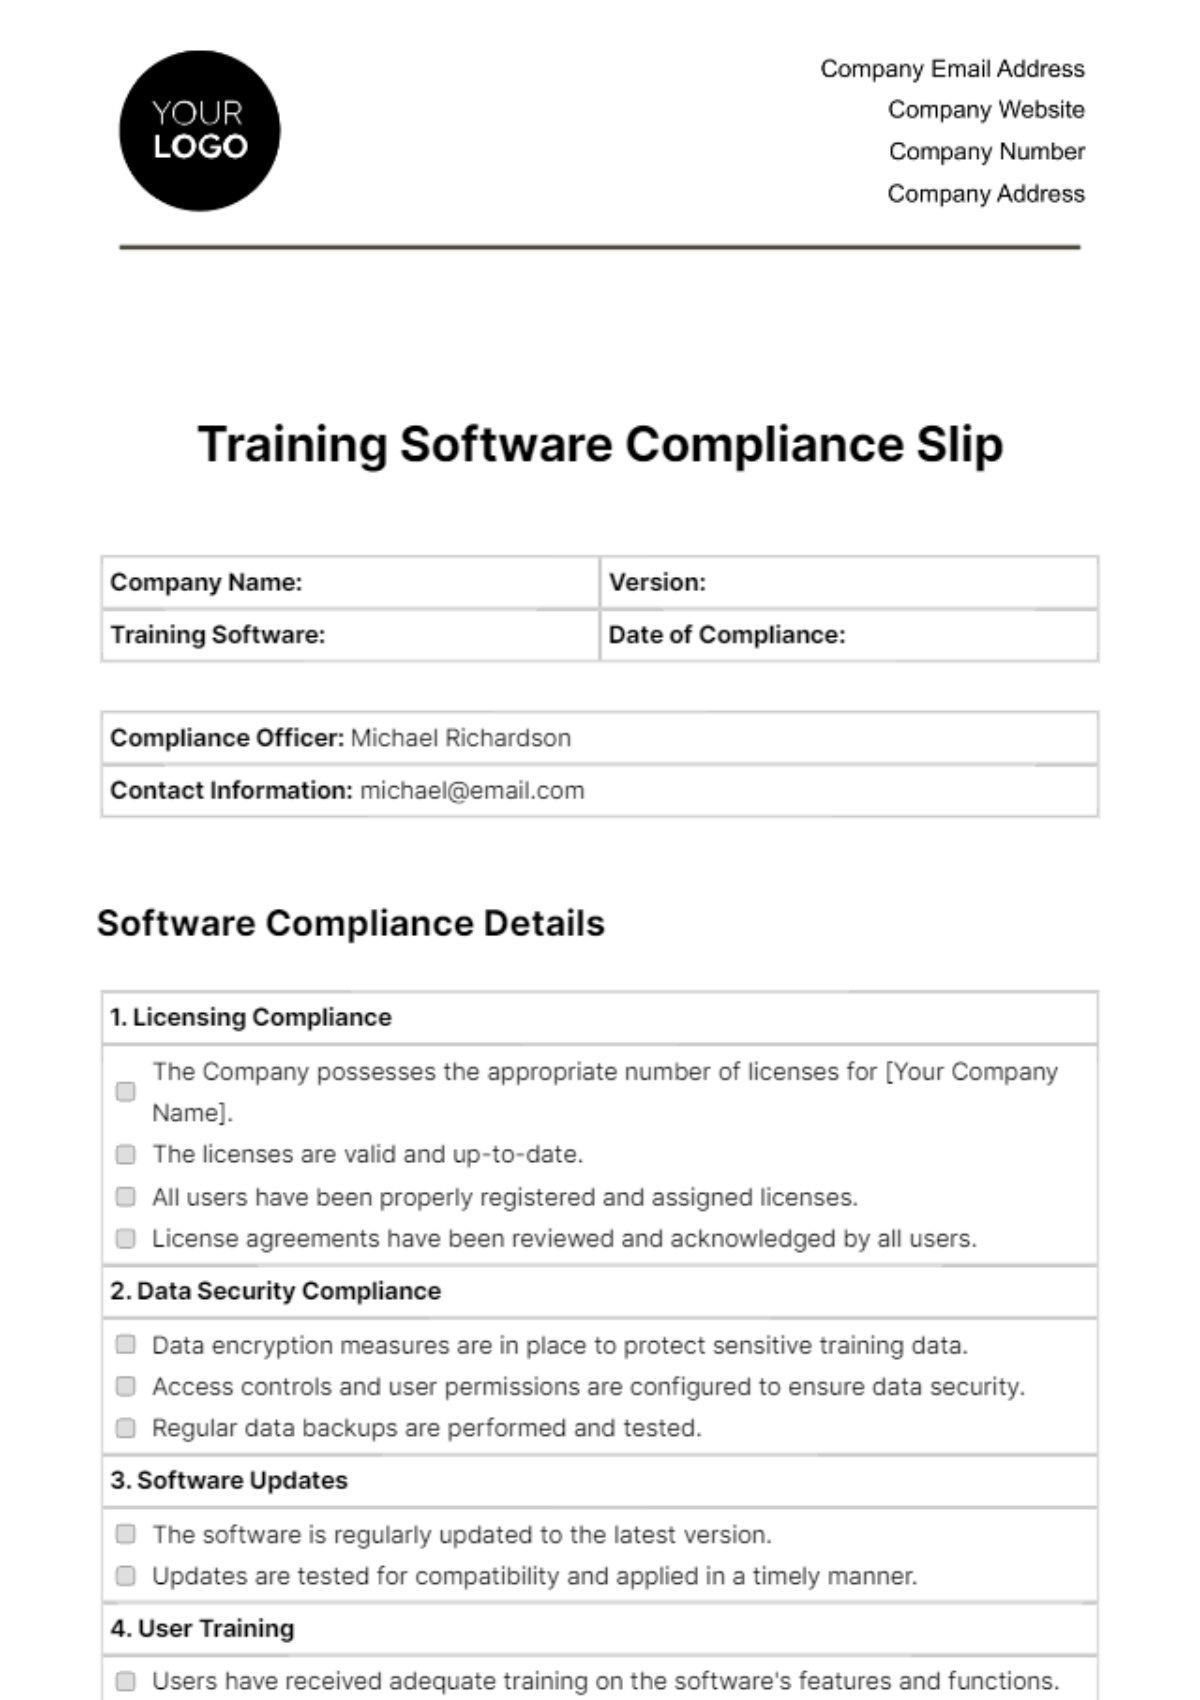 Free Training Software Compliance Slip HR Template